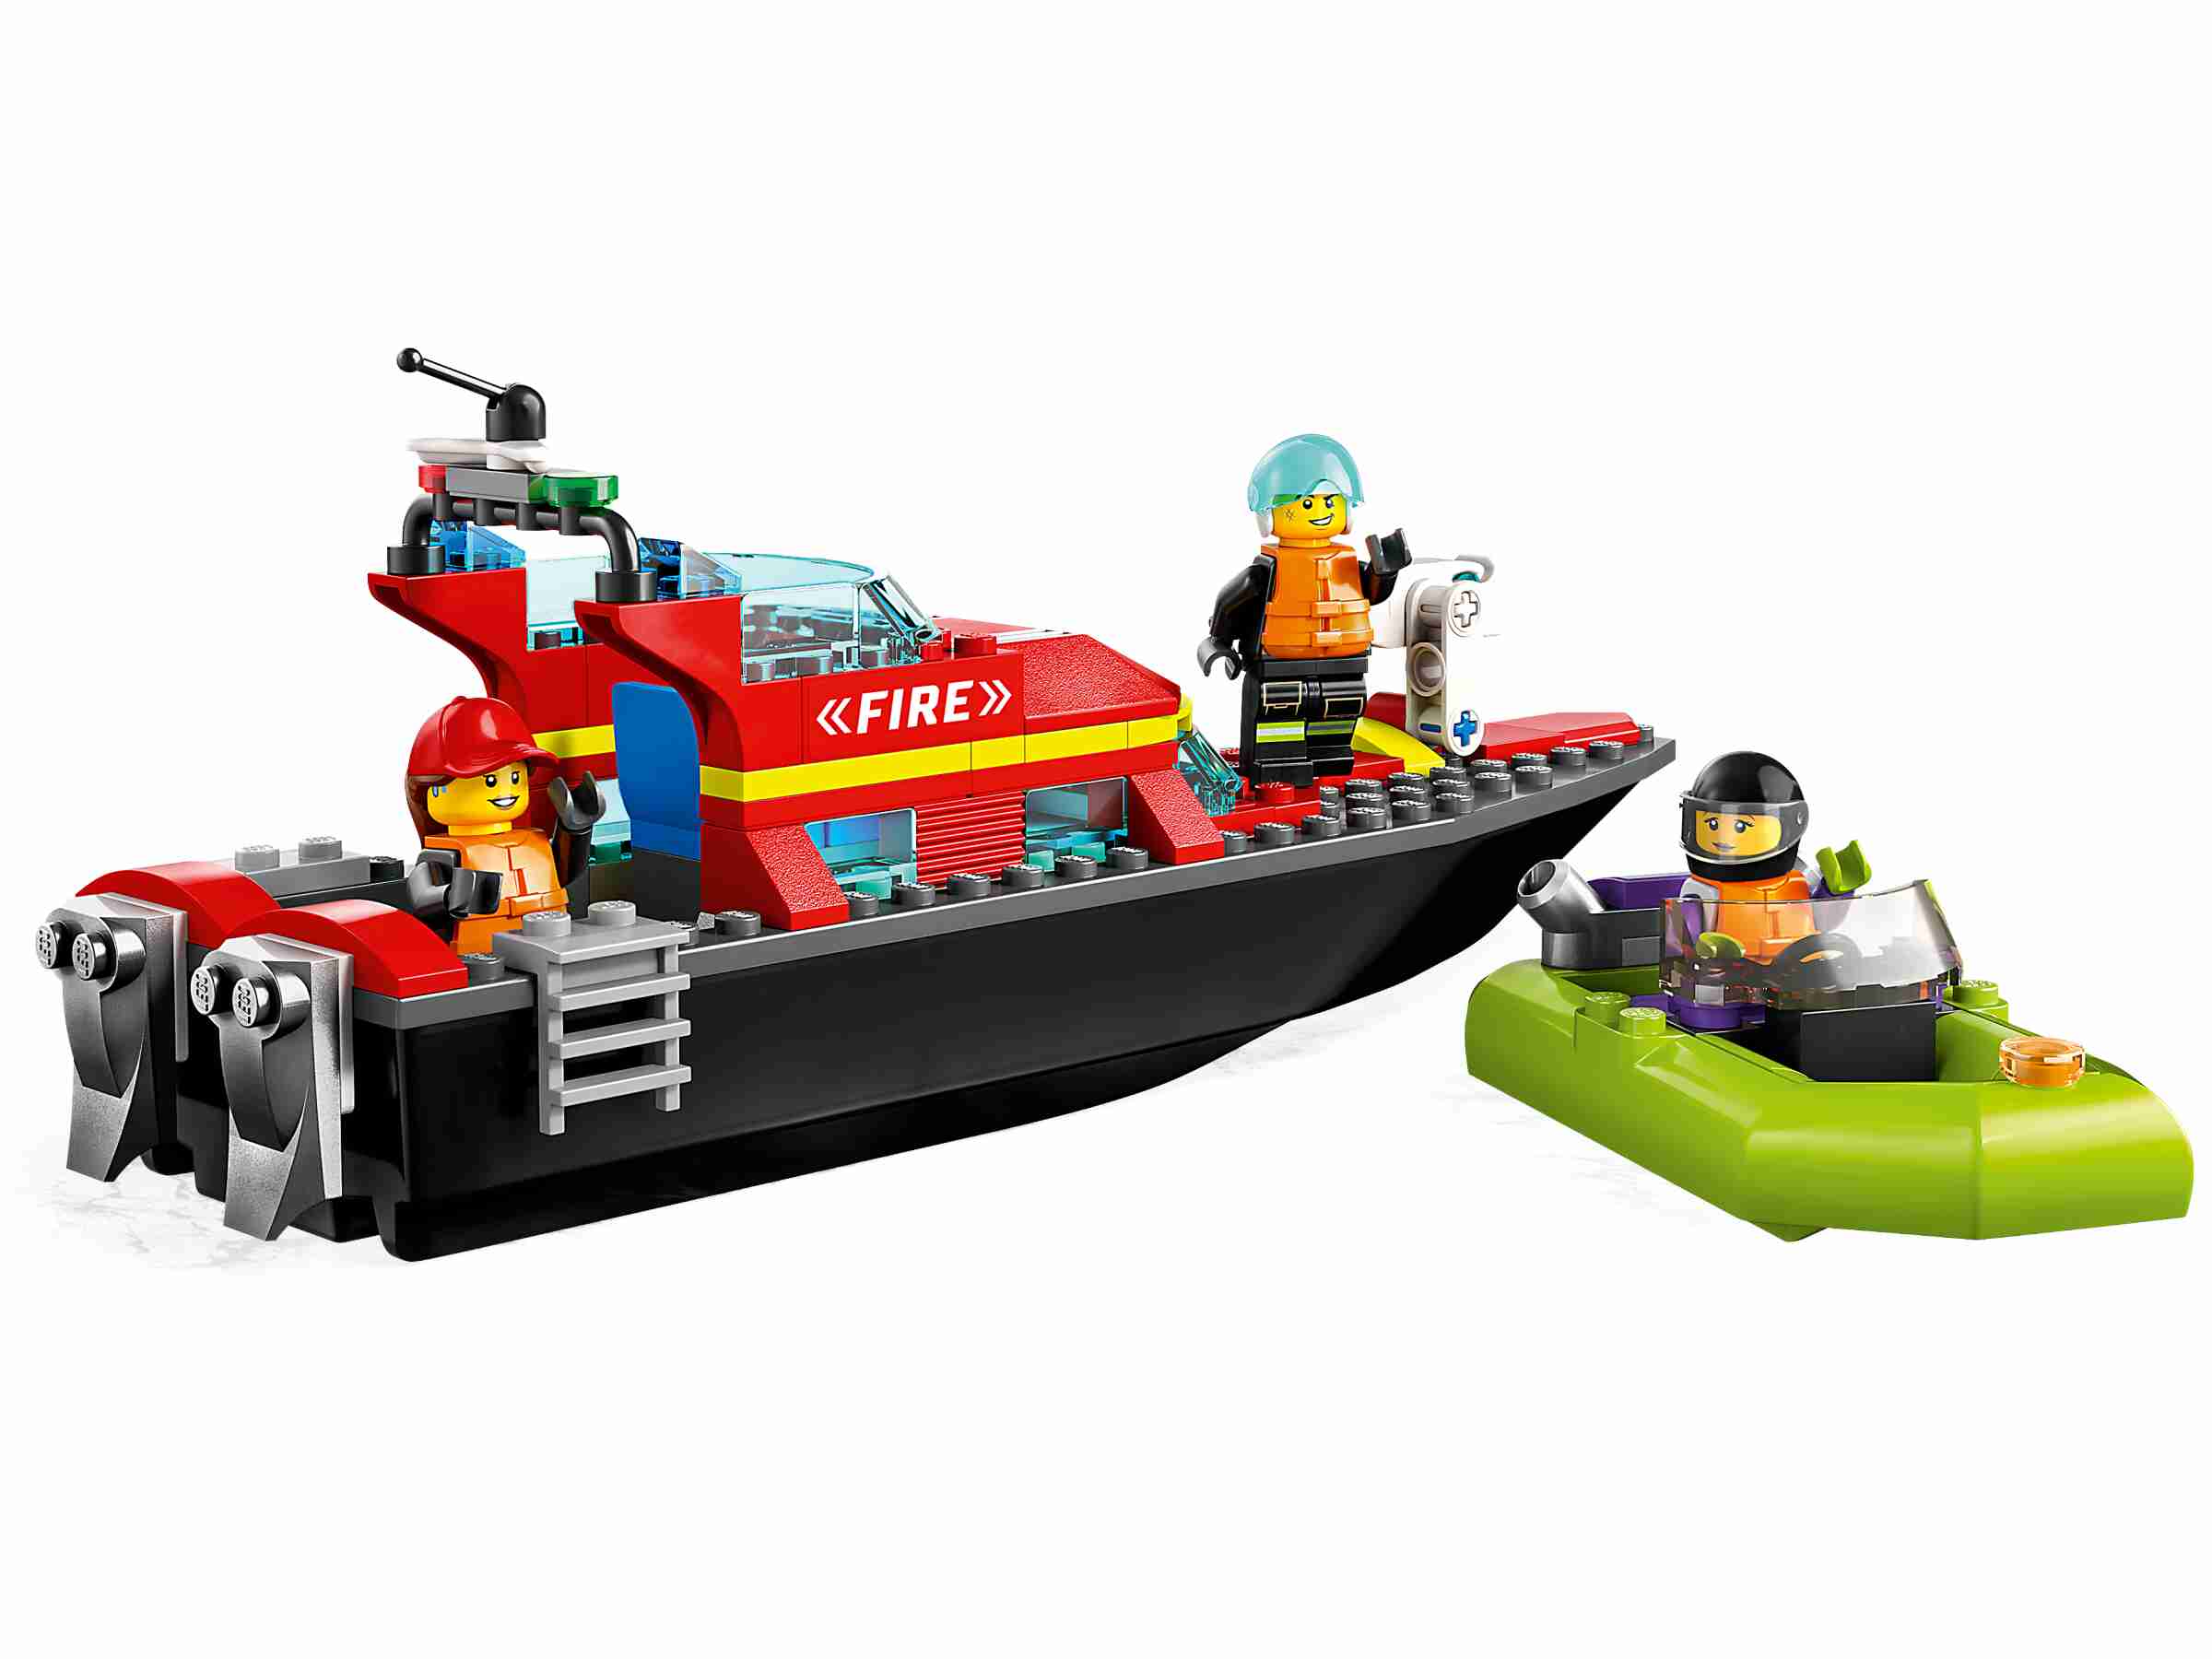 LEGO 60373 City Feuerwehrboot, Rennboot, Raketenrucksack, Löschkanone